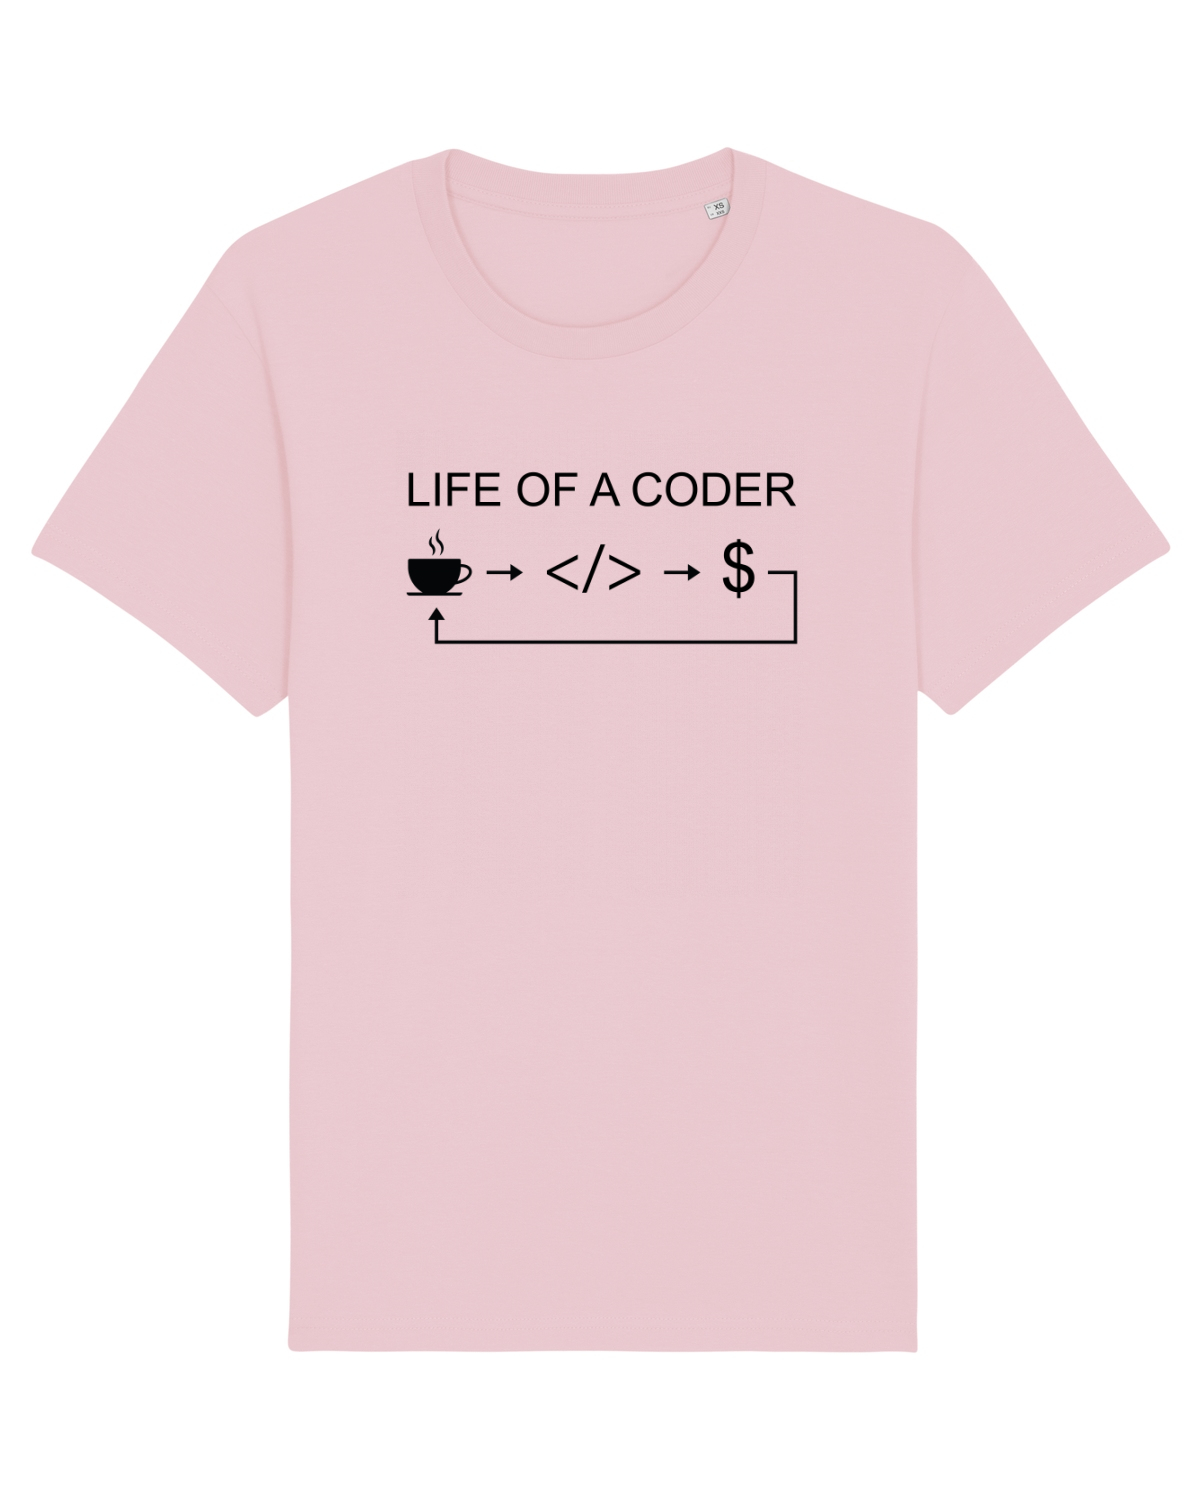 Coder life